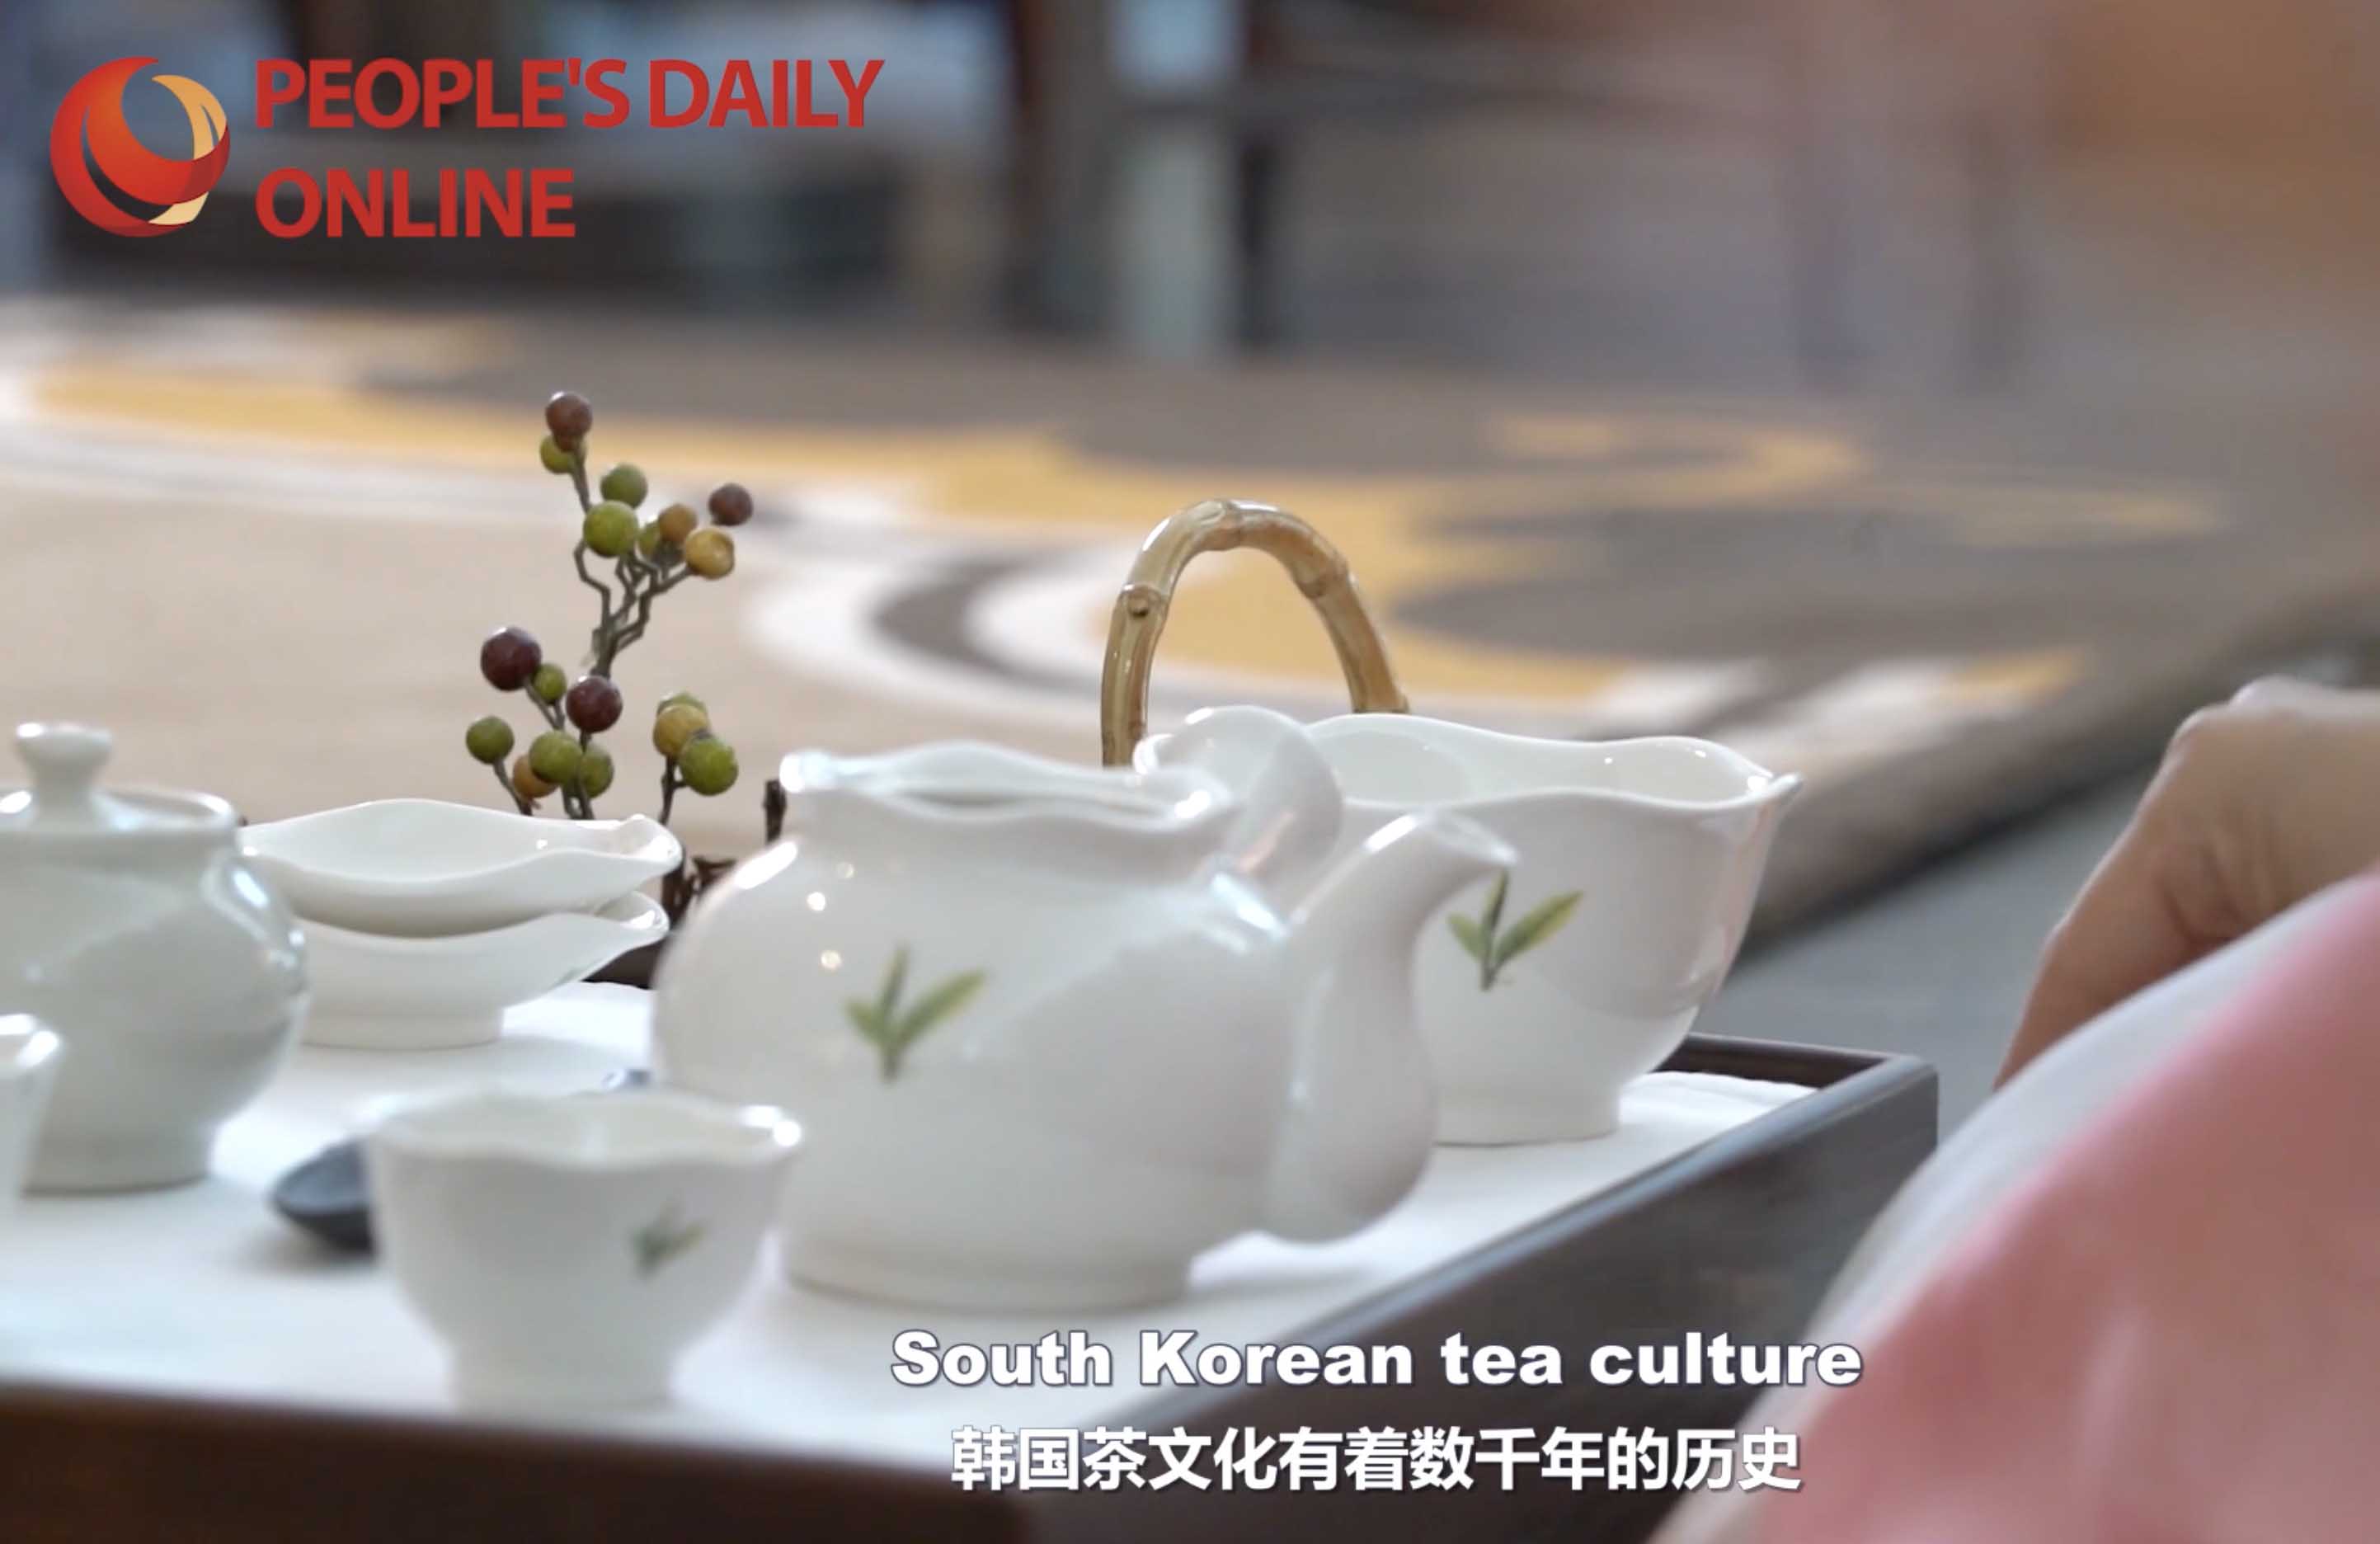 World Meets Chinese Tea Culture | South Korean tea ceremony